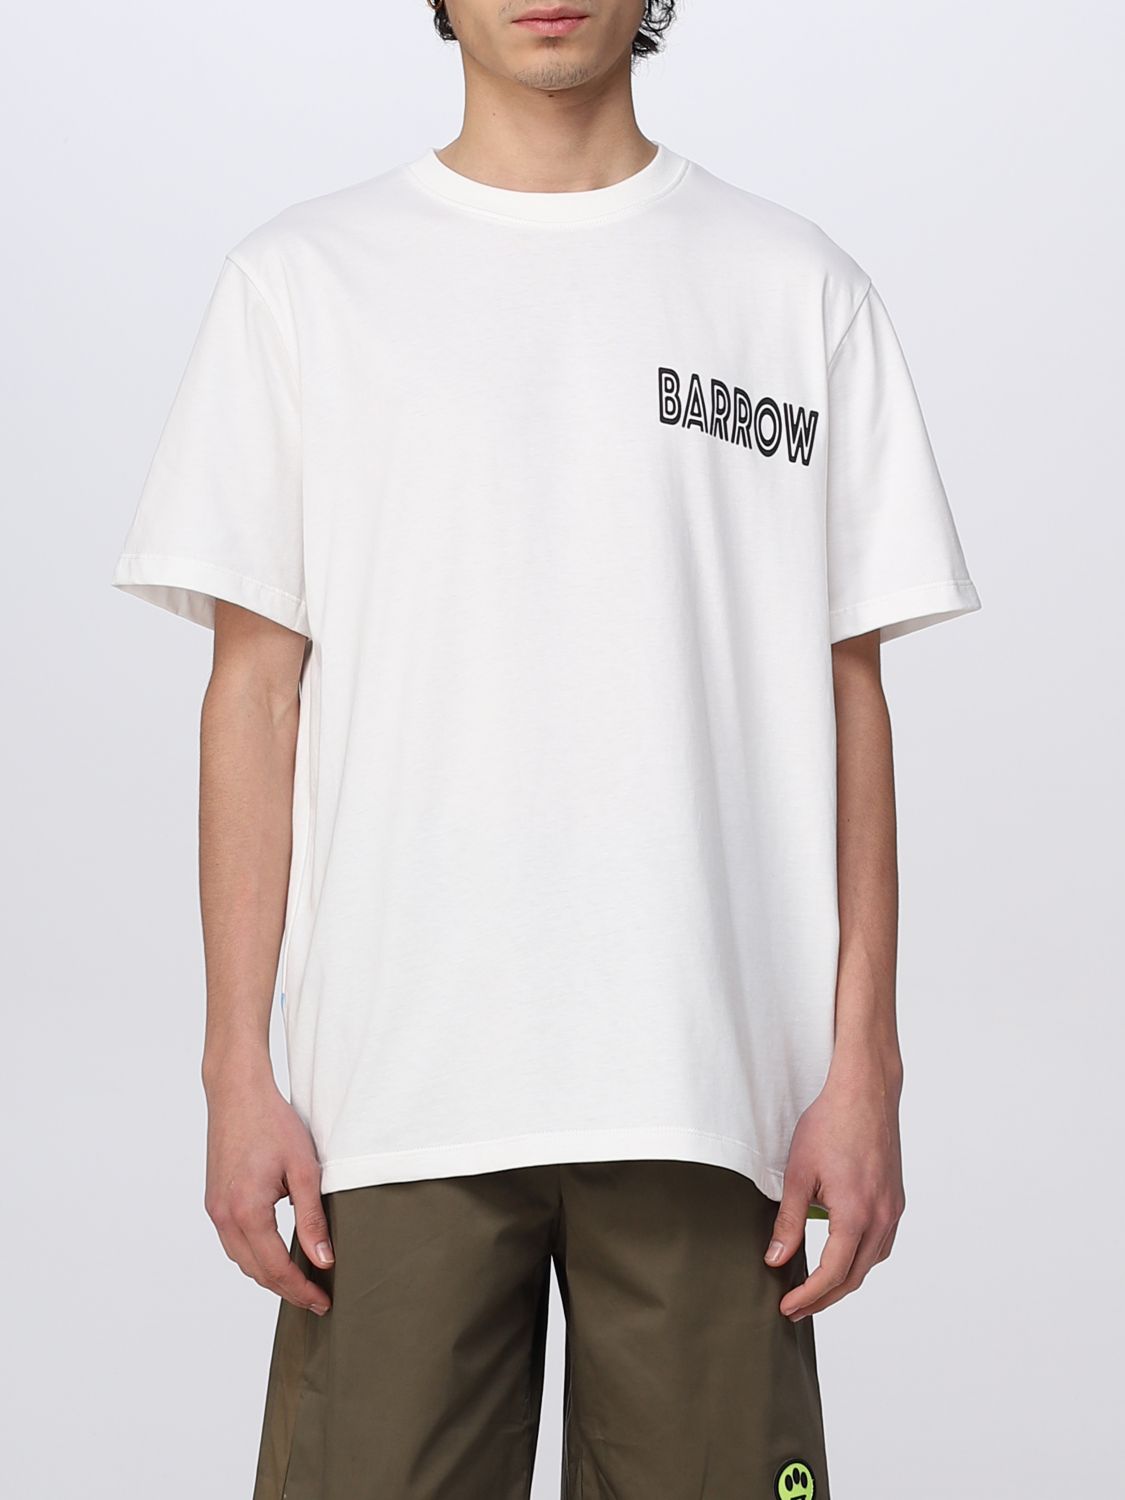 BARROW: t-shirt for man - White | Barrow t-shirt 034081 online on ...